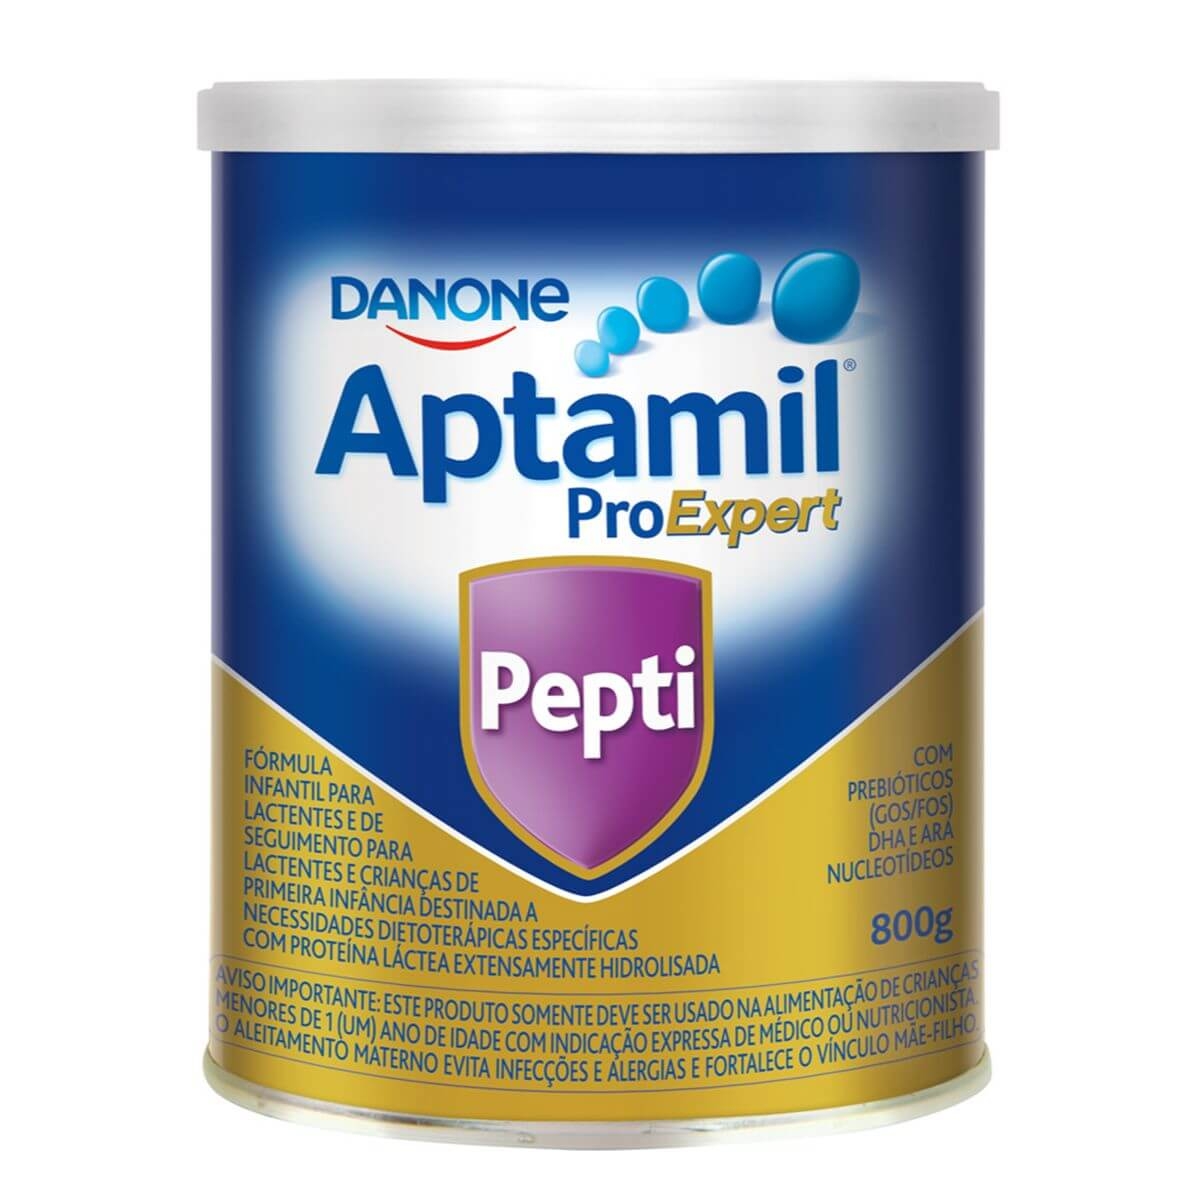 Fórmula Infantil Aptamil ProExpert Pepti Danone 0 a 36 meses com 800g